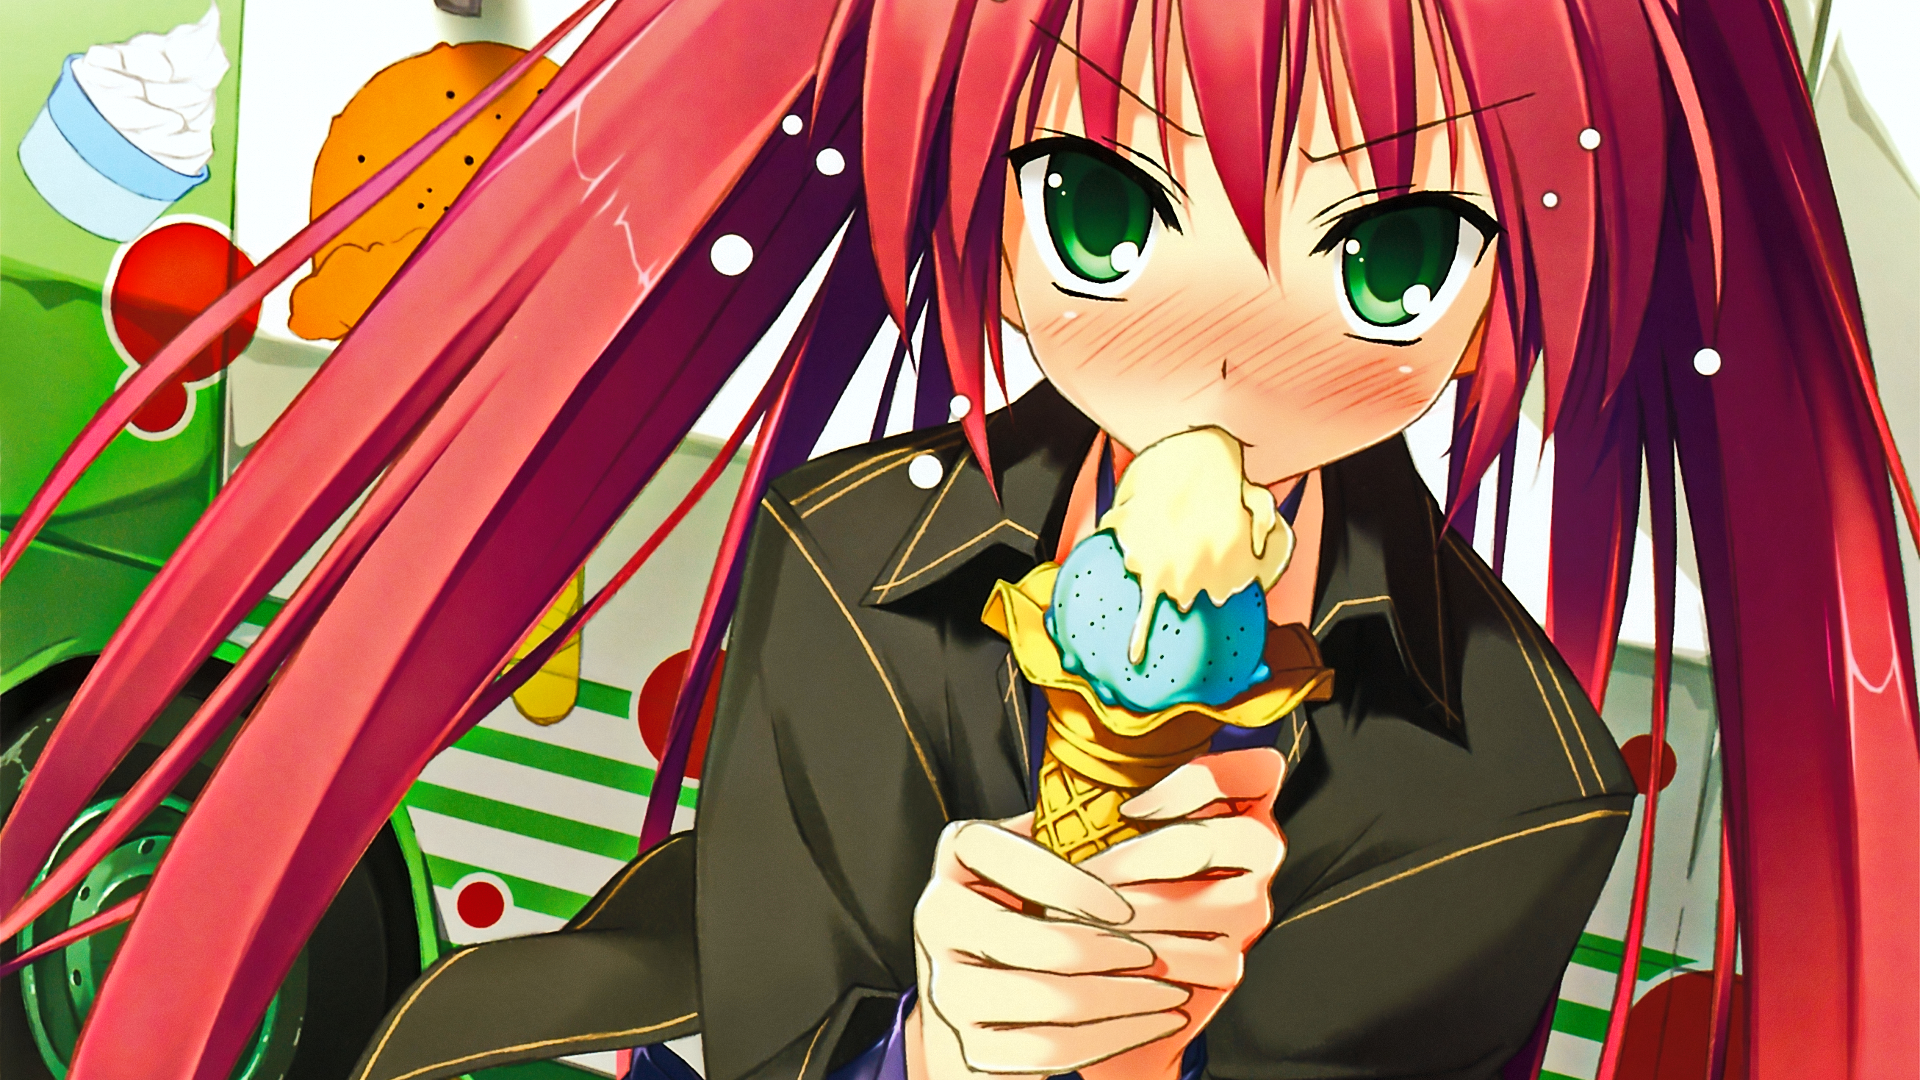 Anime girl with ice cream